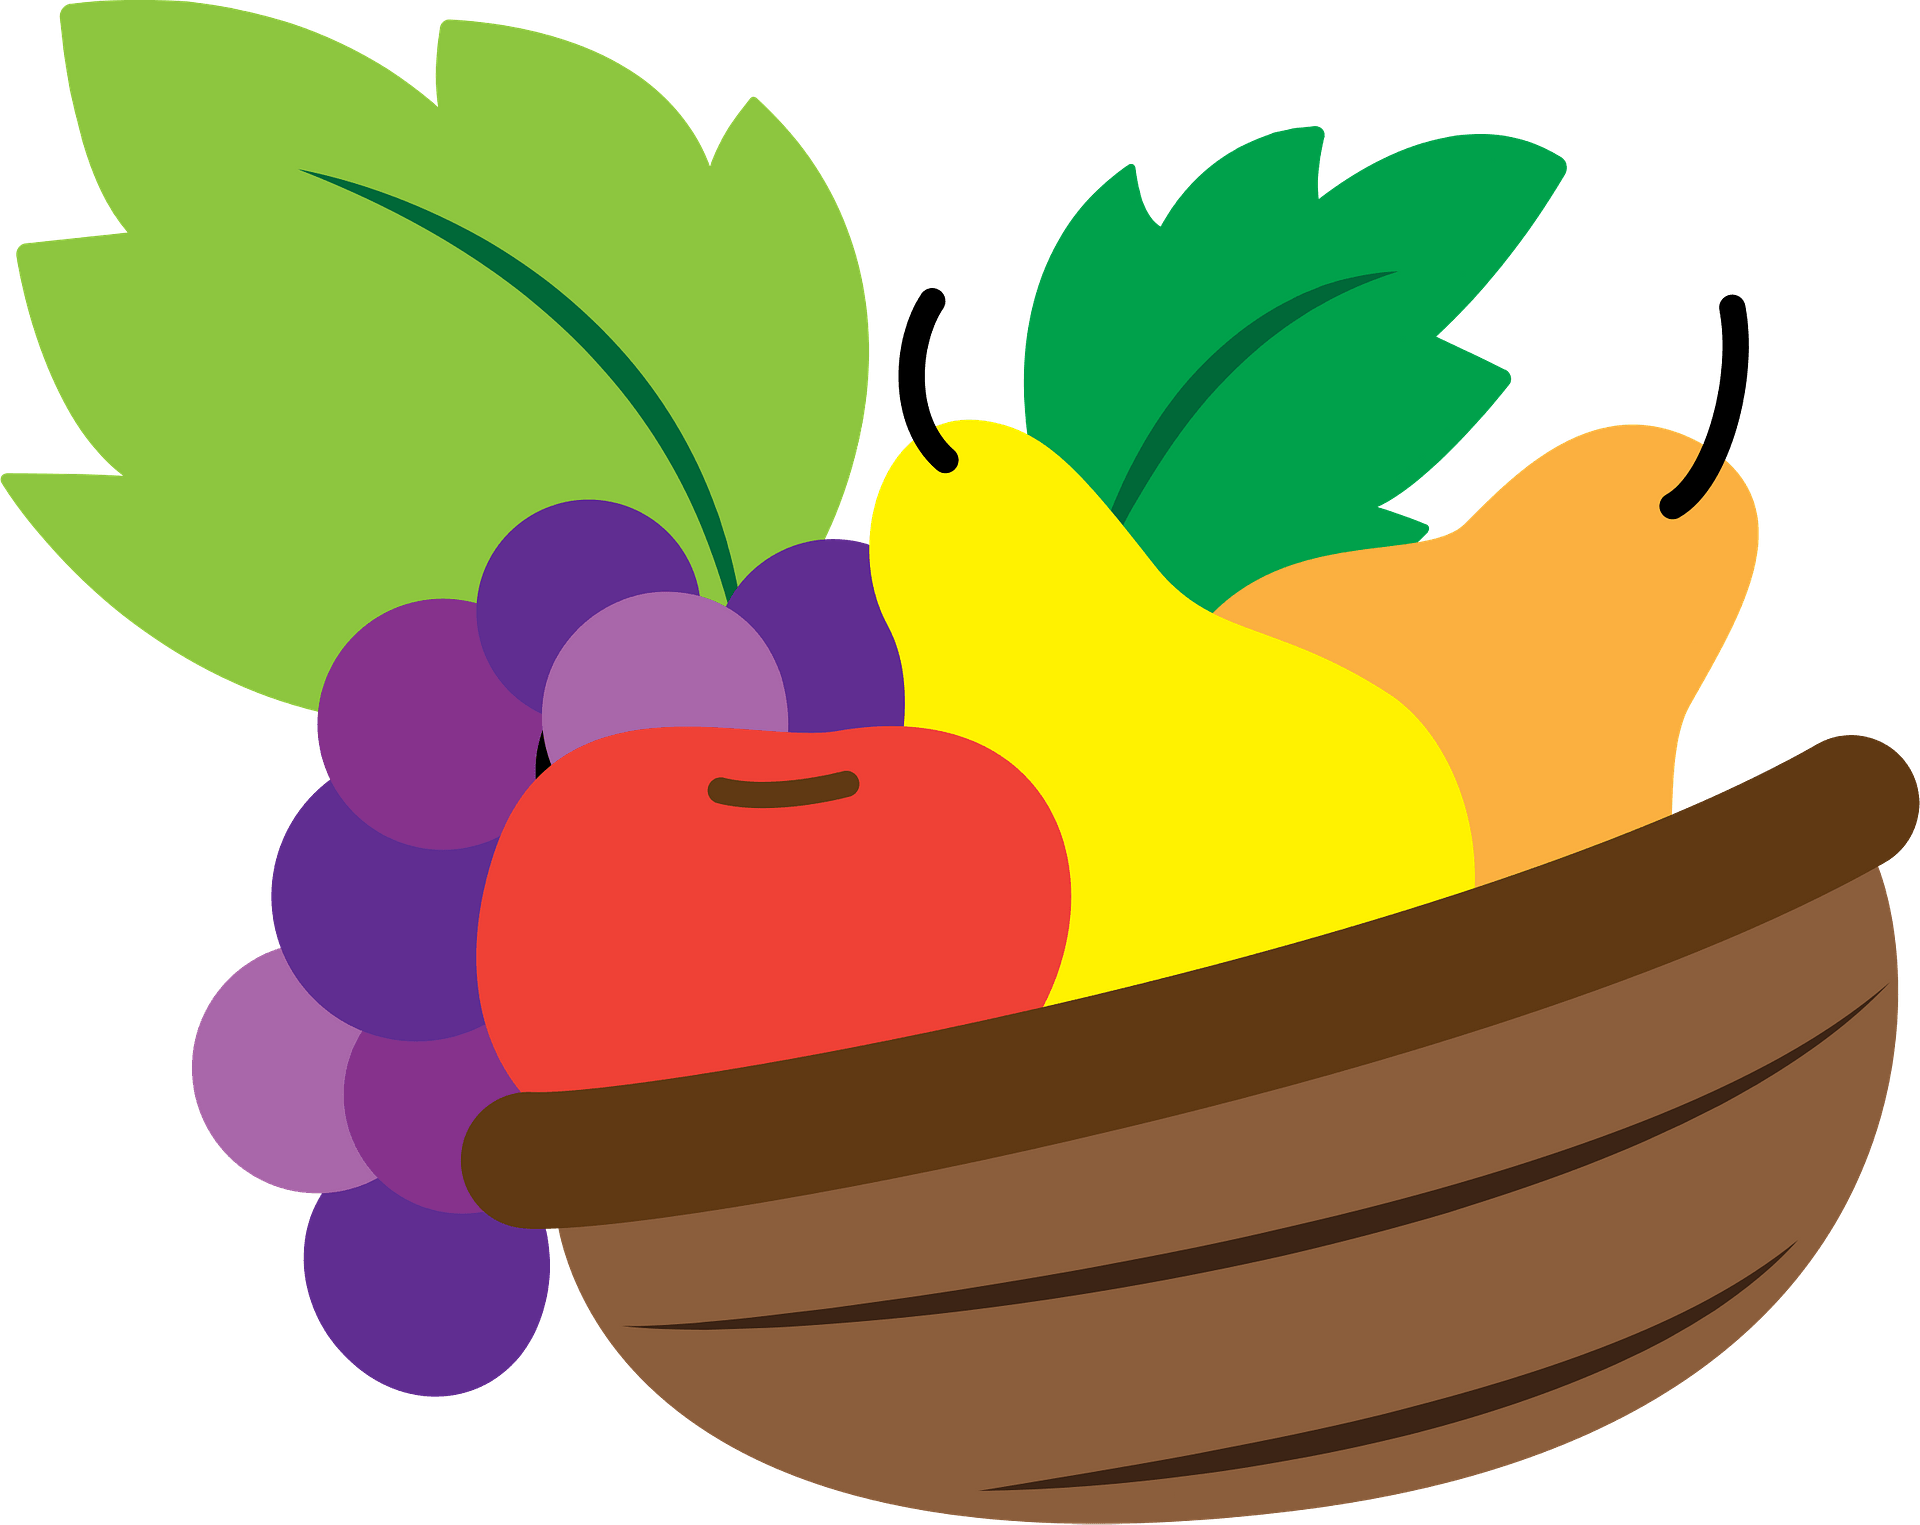 fruit clip art